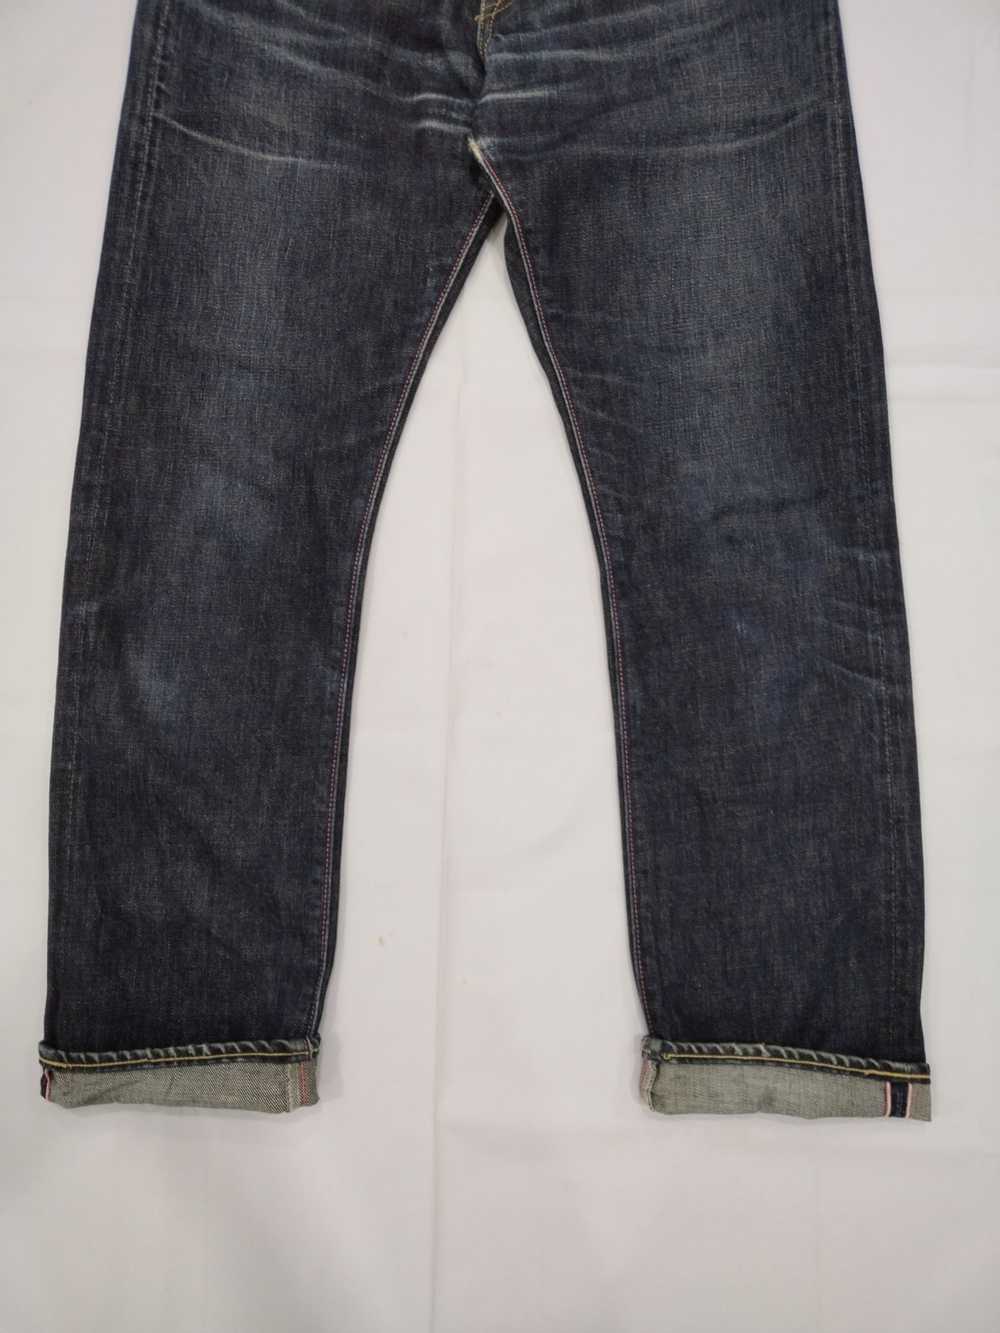 Japanese Brand × Momotaro Momotaro Selvedge Jeans - image 4